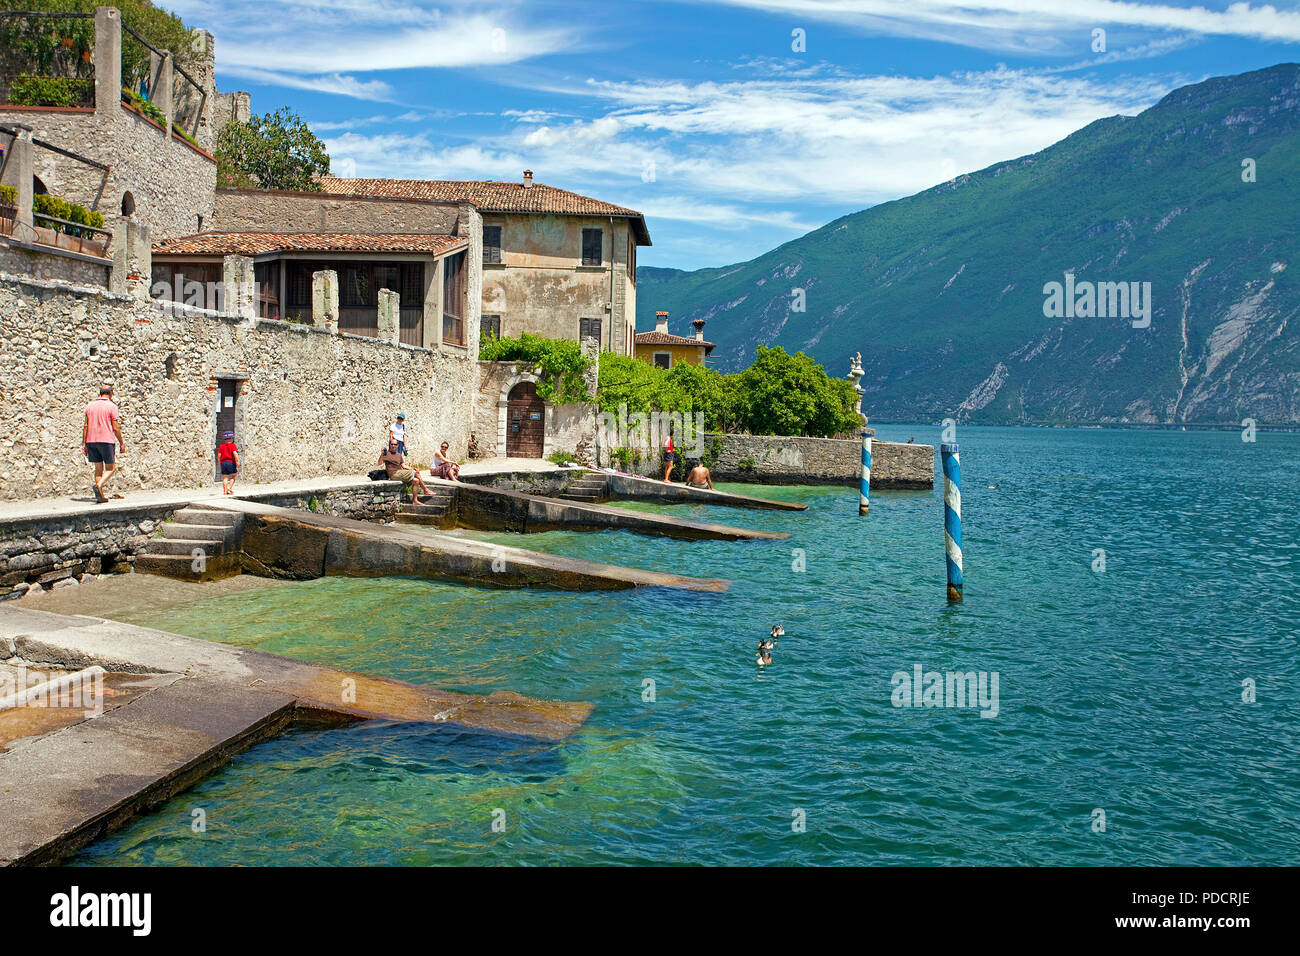 End of lake promenade and town Limone, Limone sul Garda, Lake Garda, Lombardy, Italy Stock Photo